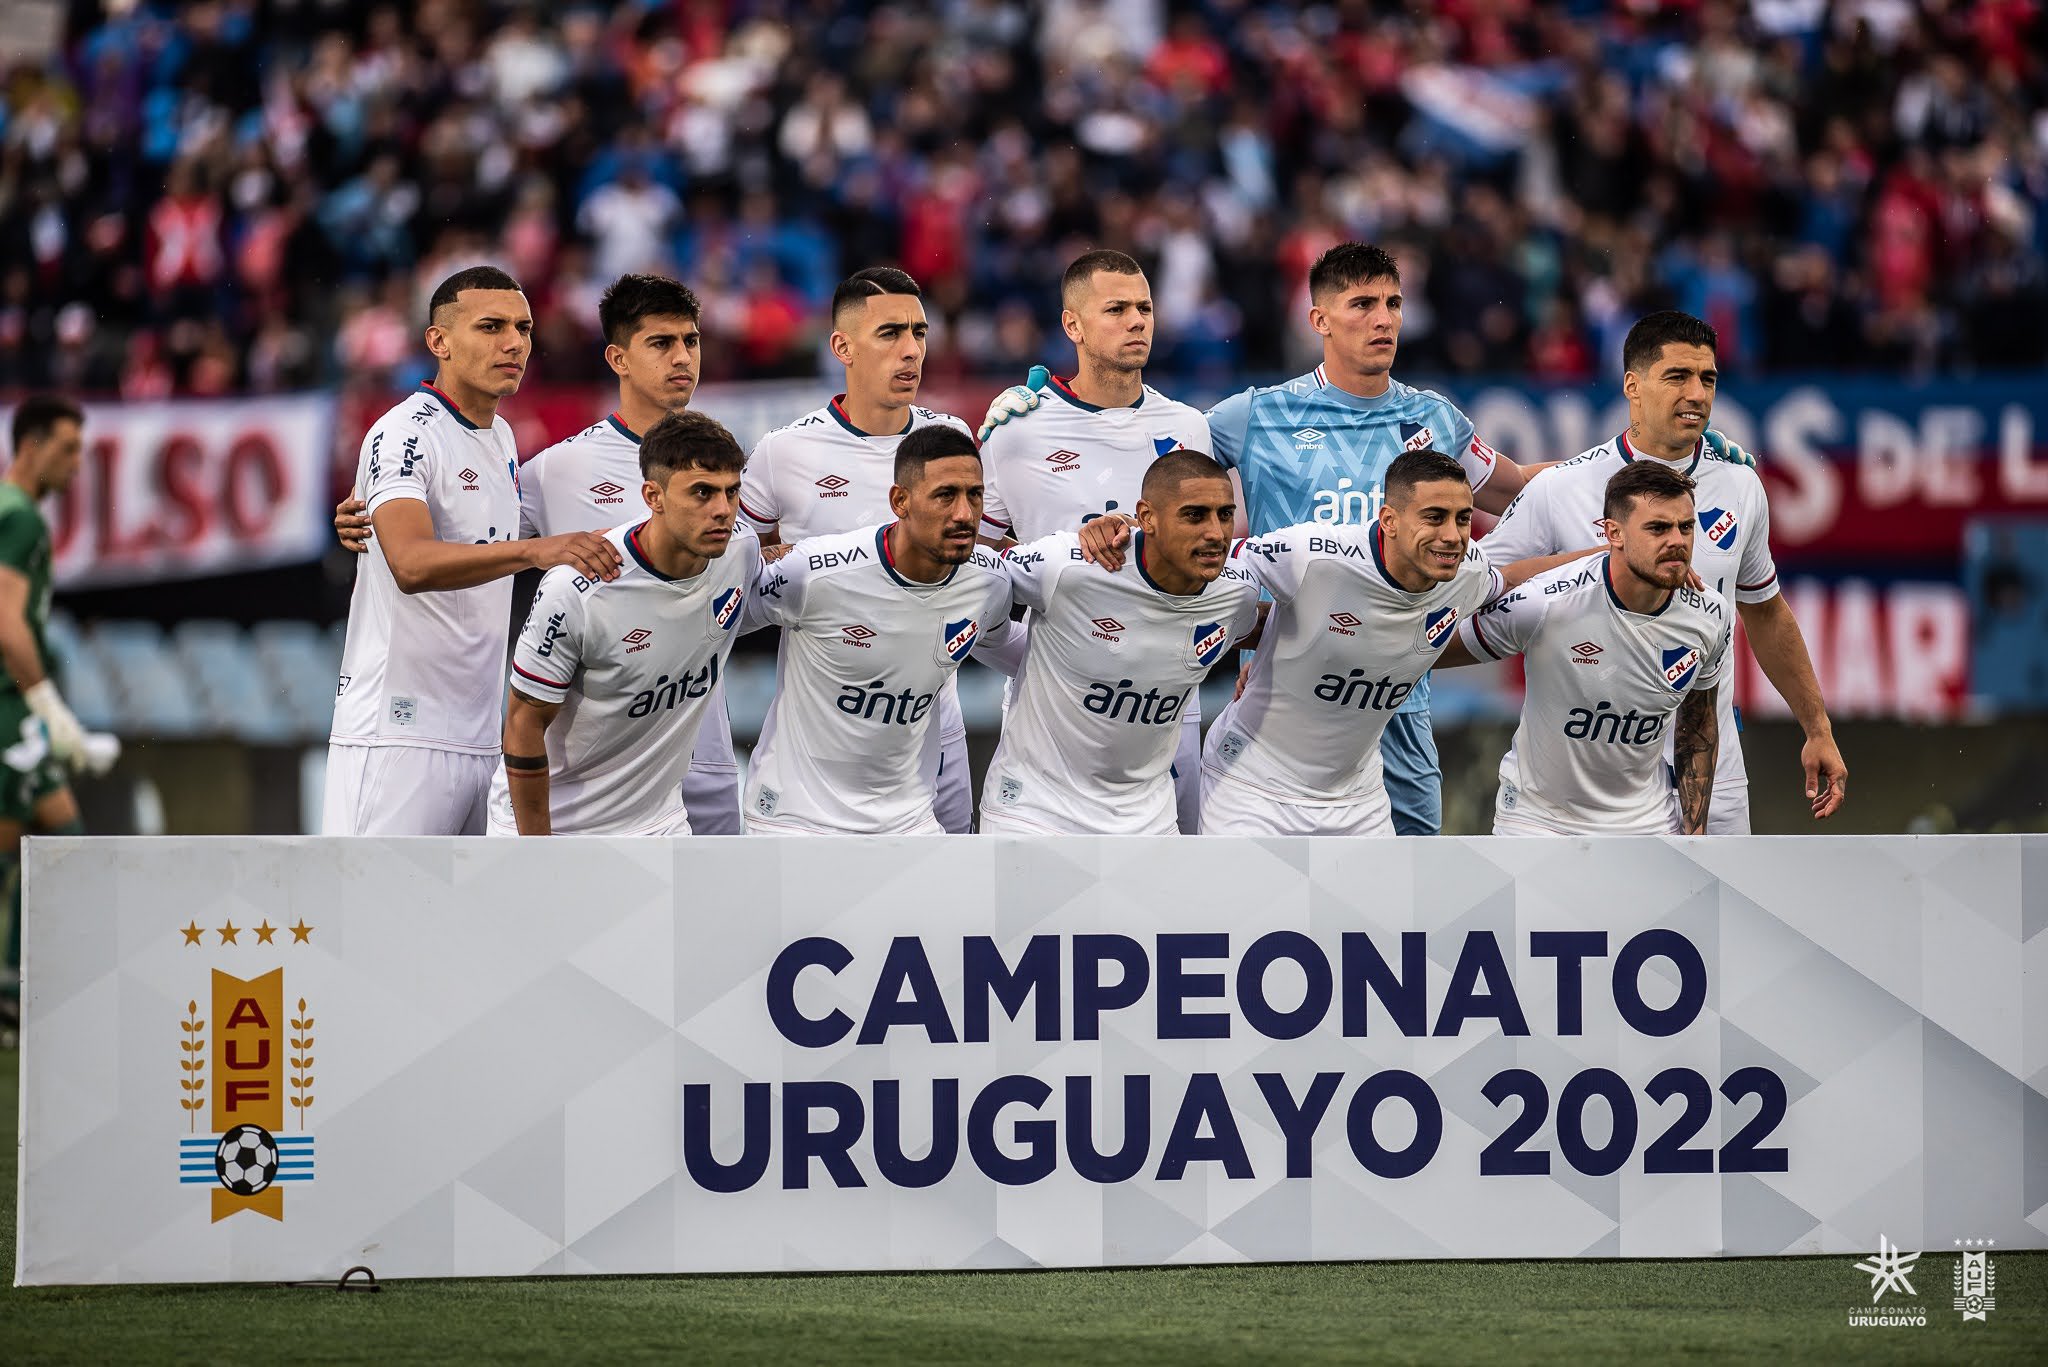 NACIONAL CAMPEÓN URUGUAYO 2022! - Club Nacional de Football